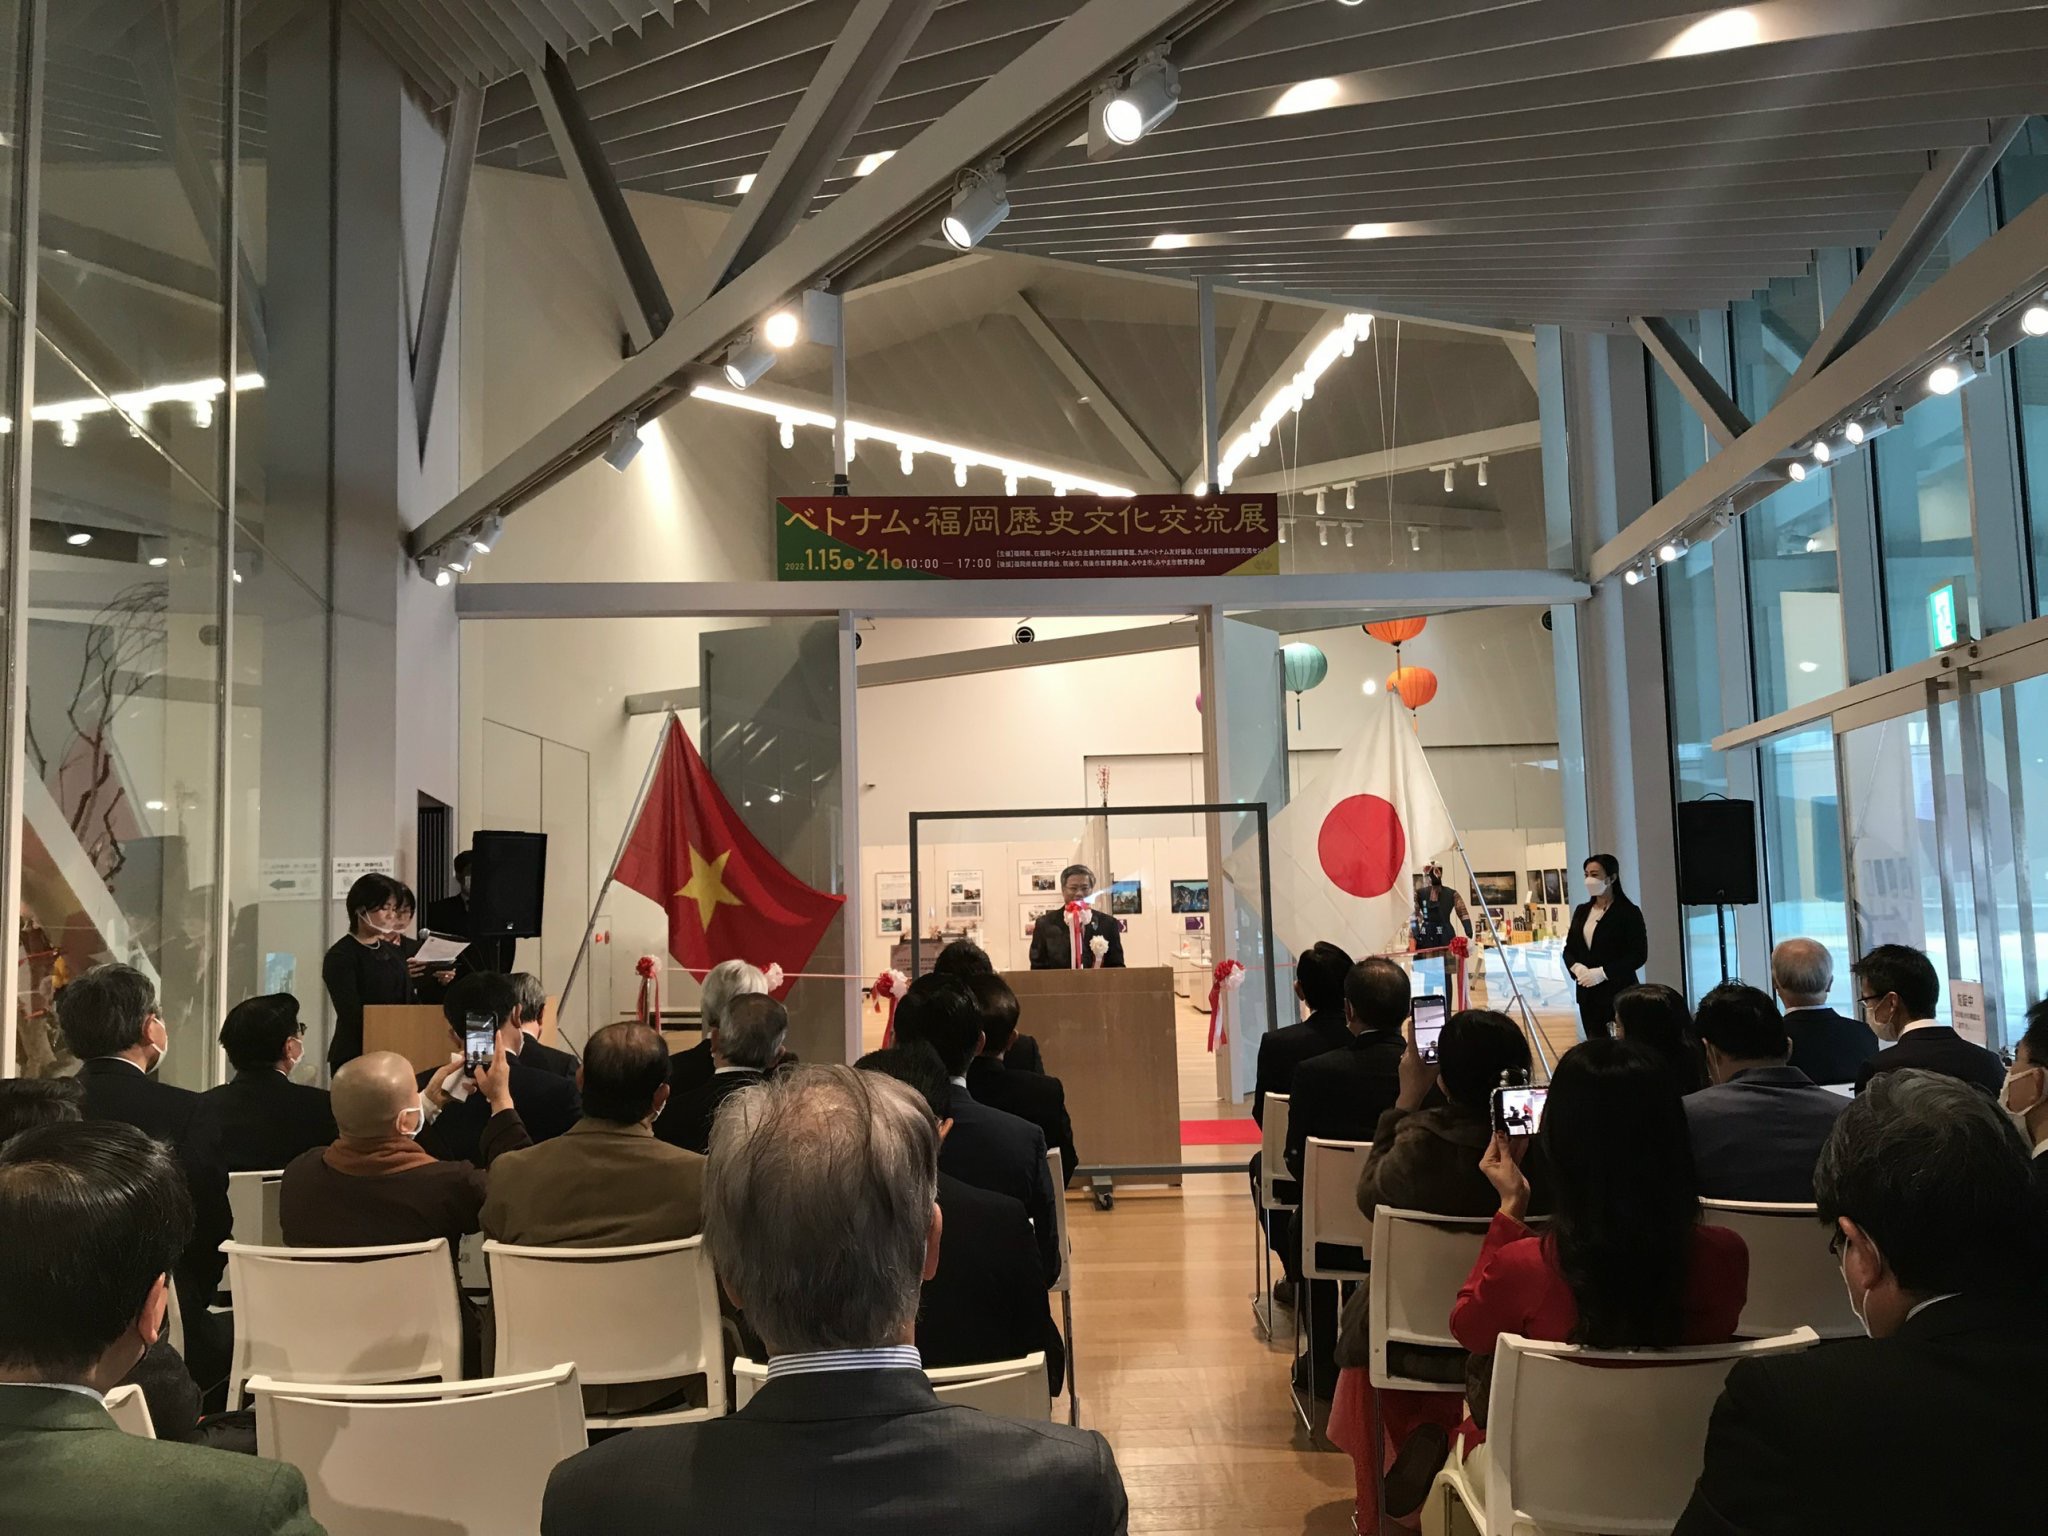 Chuỗi sự kiện cùng Lễ hội Tết Việt Nam tại Fukuoka 2022